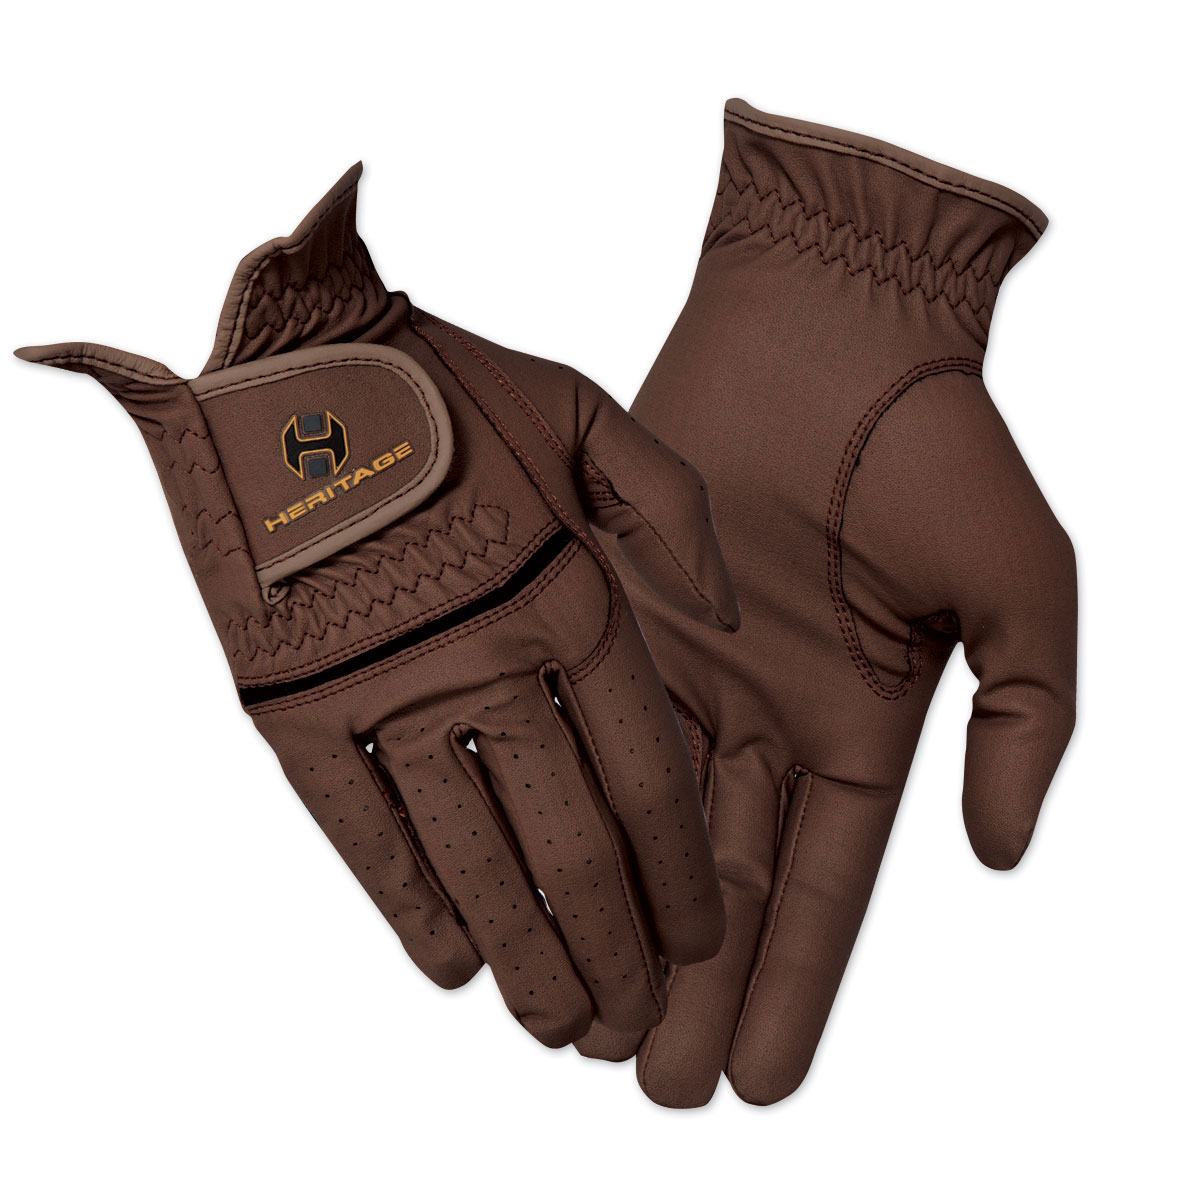 Heritage Equestrian "Premier Show Glove" in Black Size 11